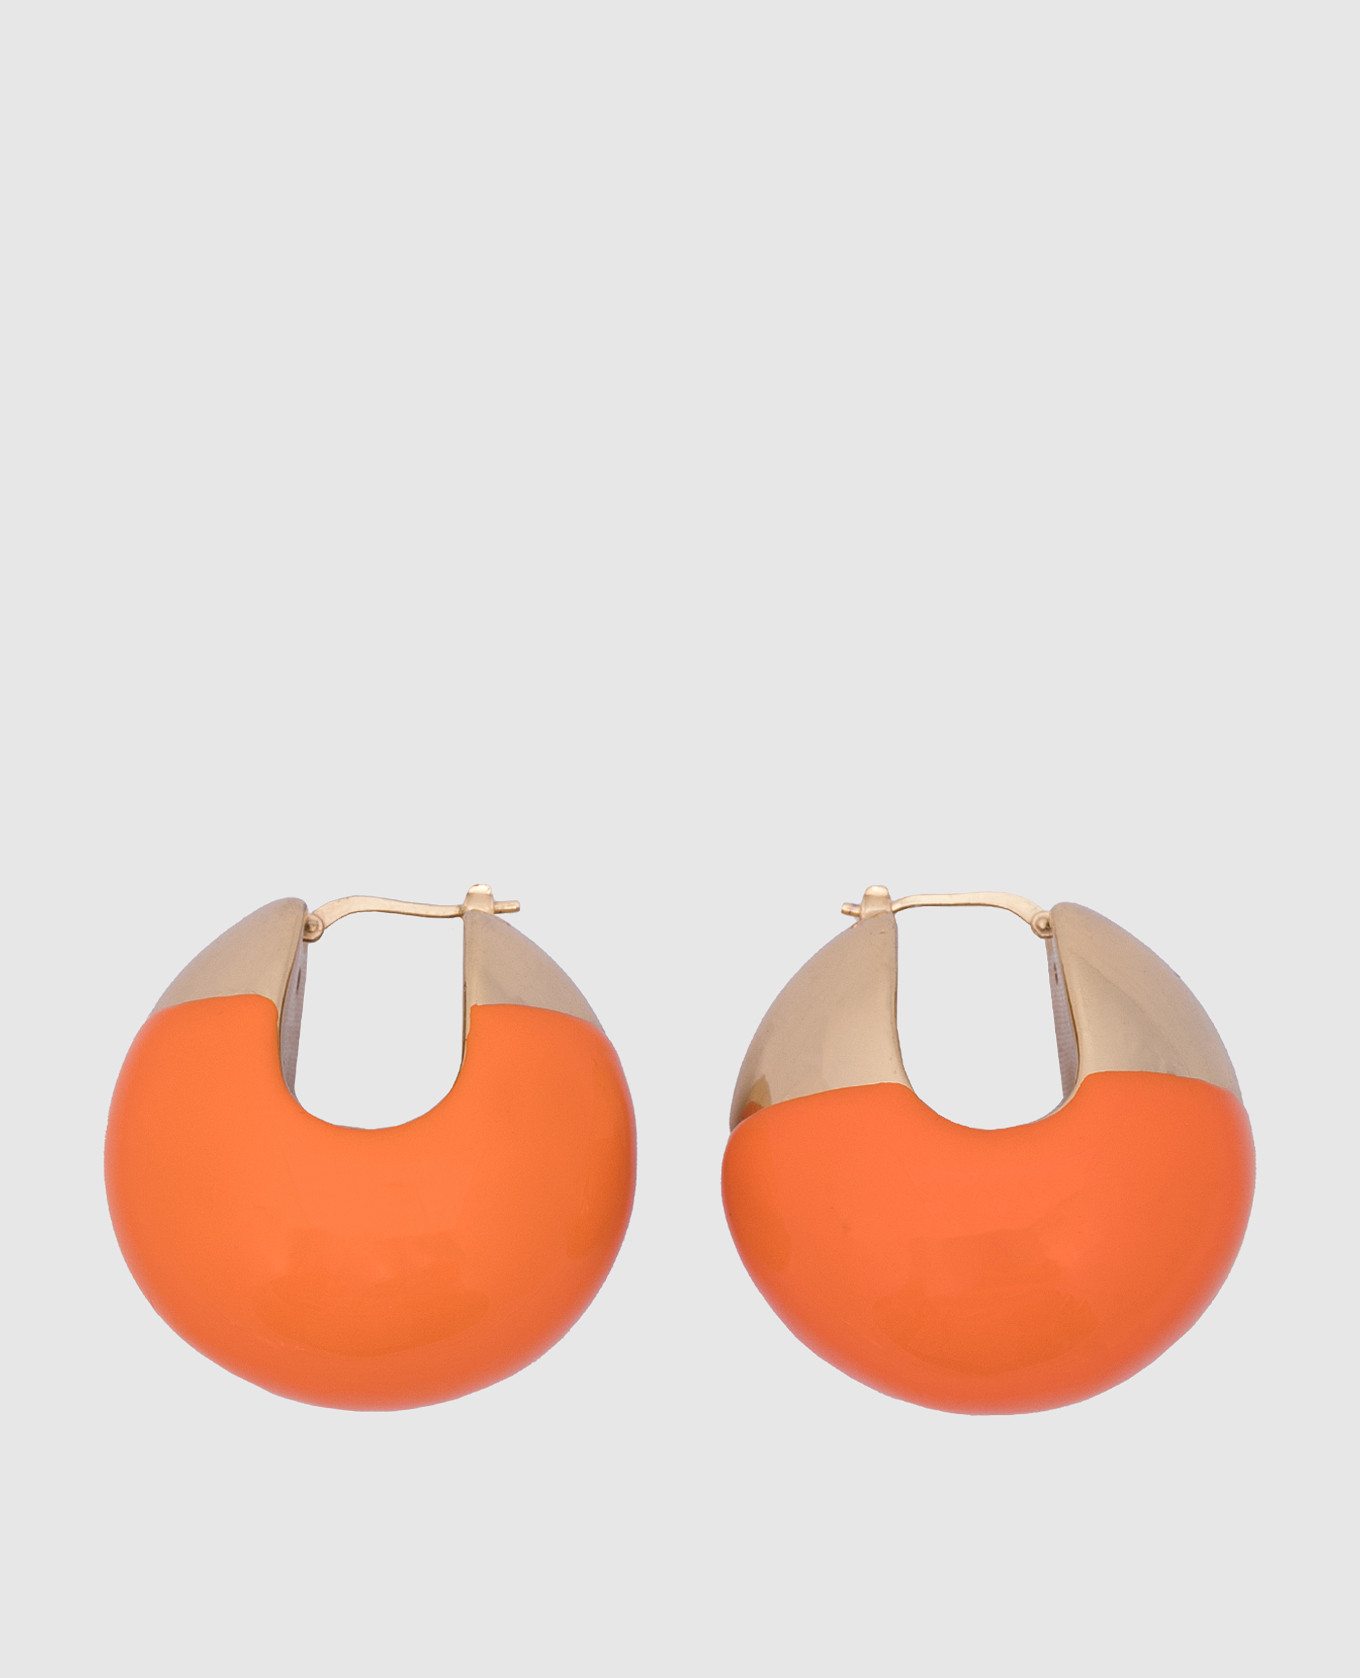 Orange Boule earrings with 24k gold plating